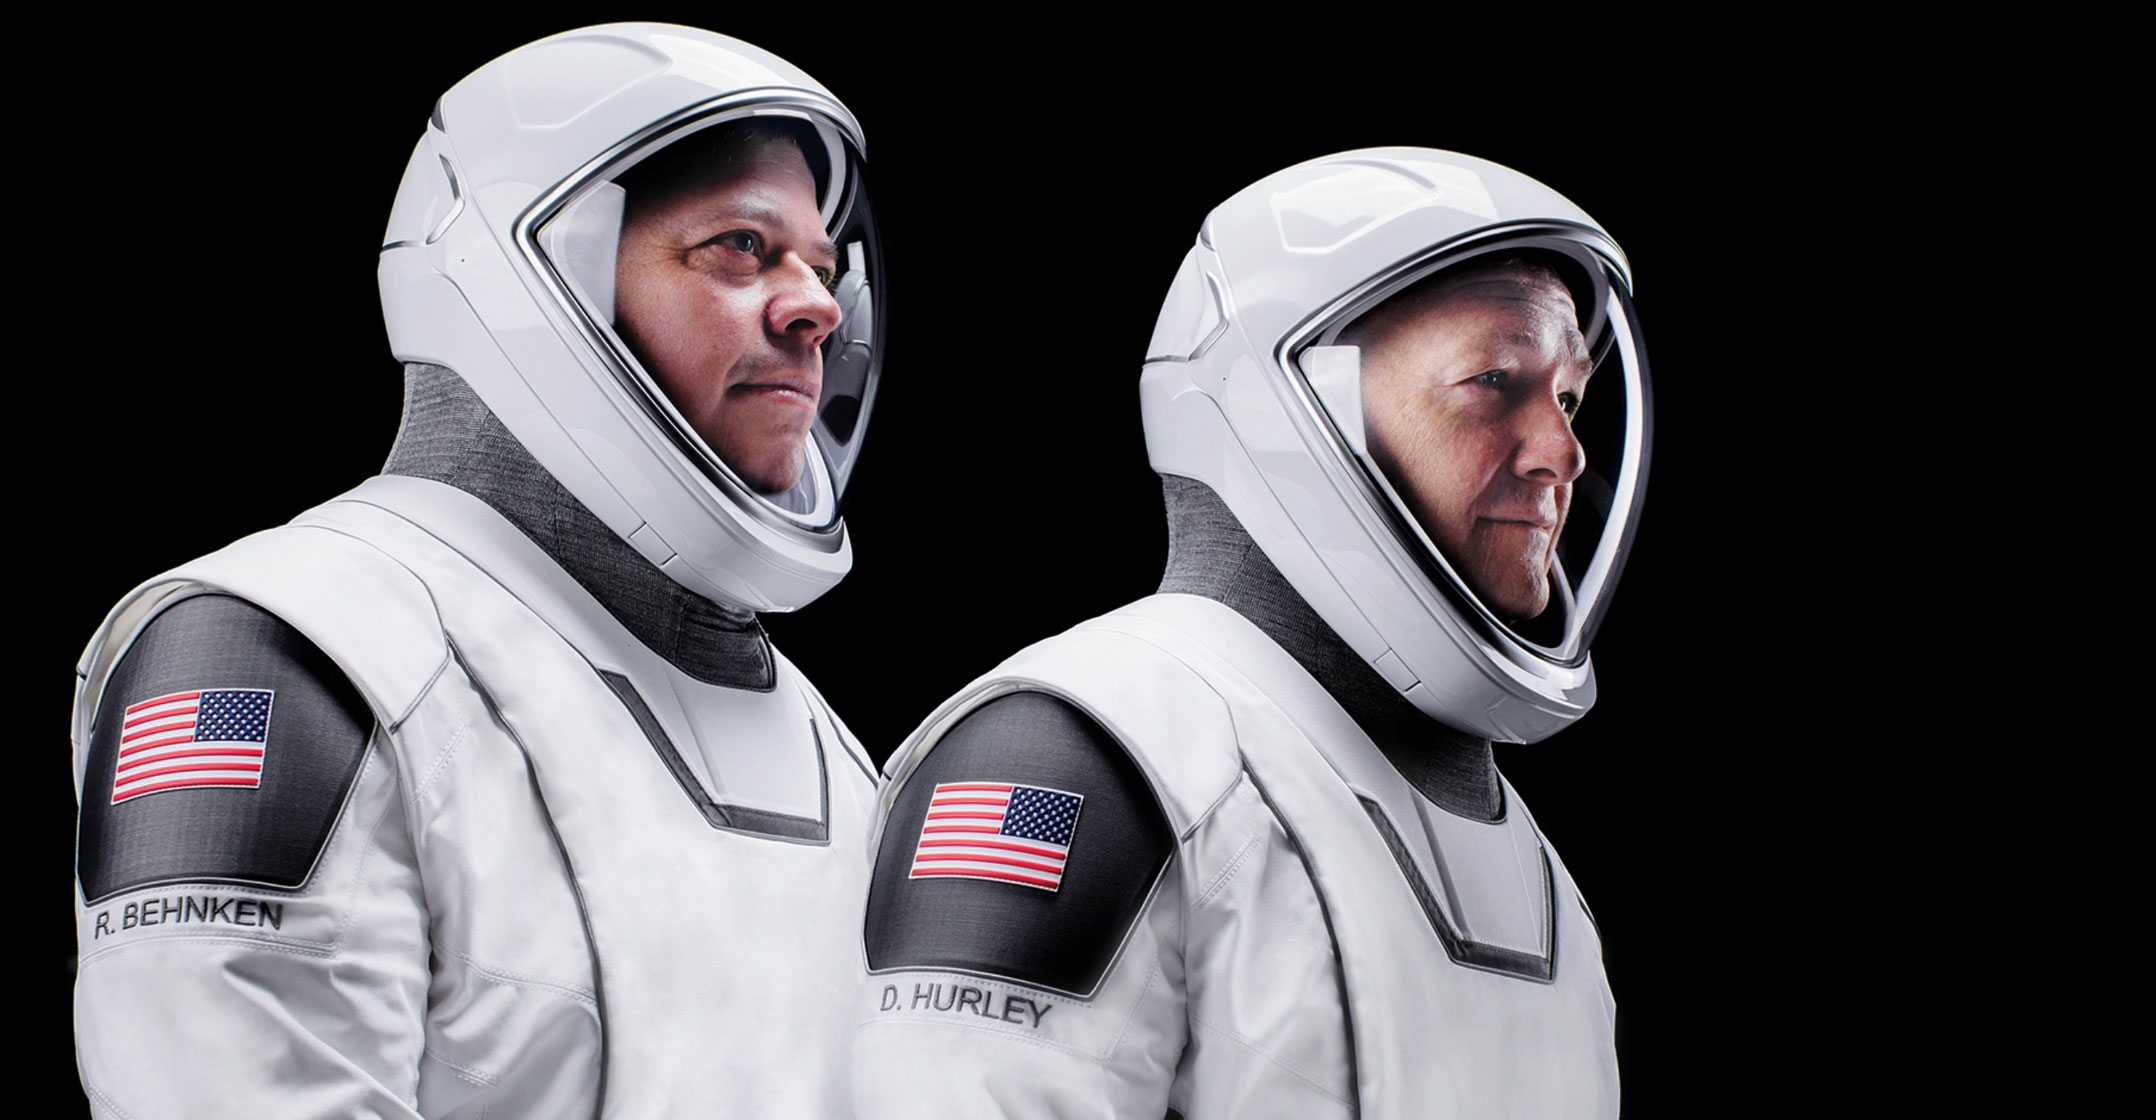 spacex-astronauts-2156-1120.jpg